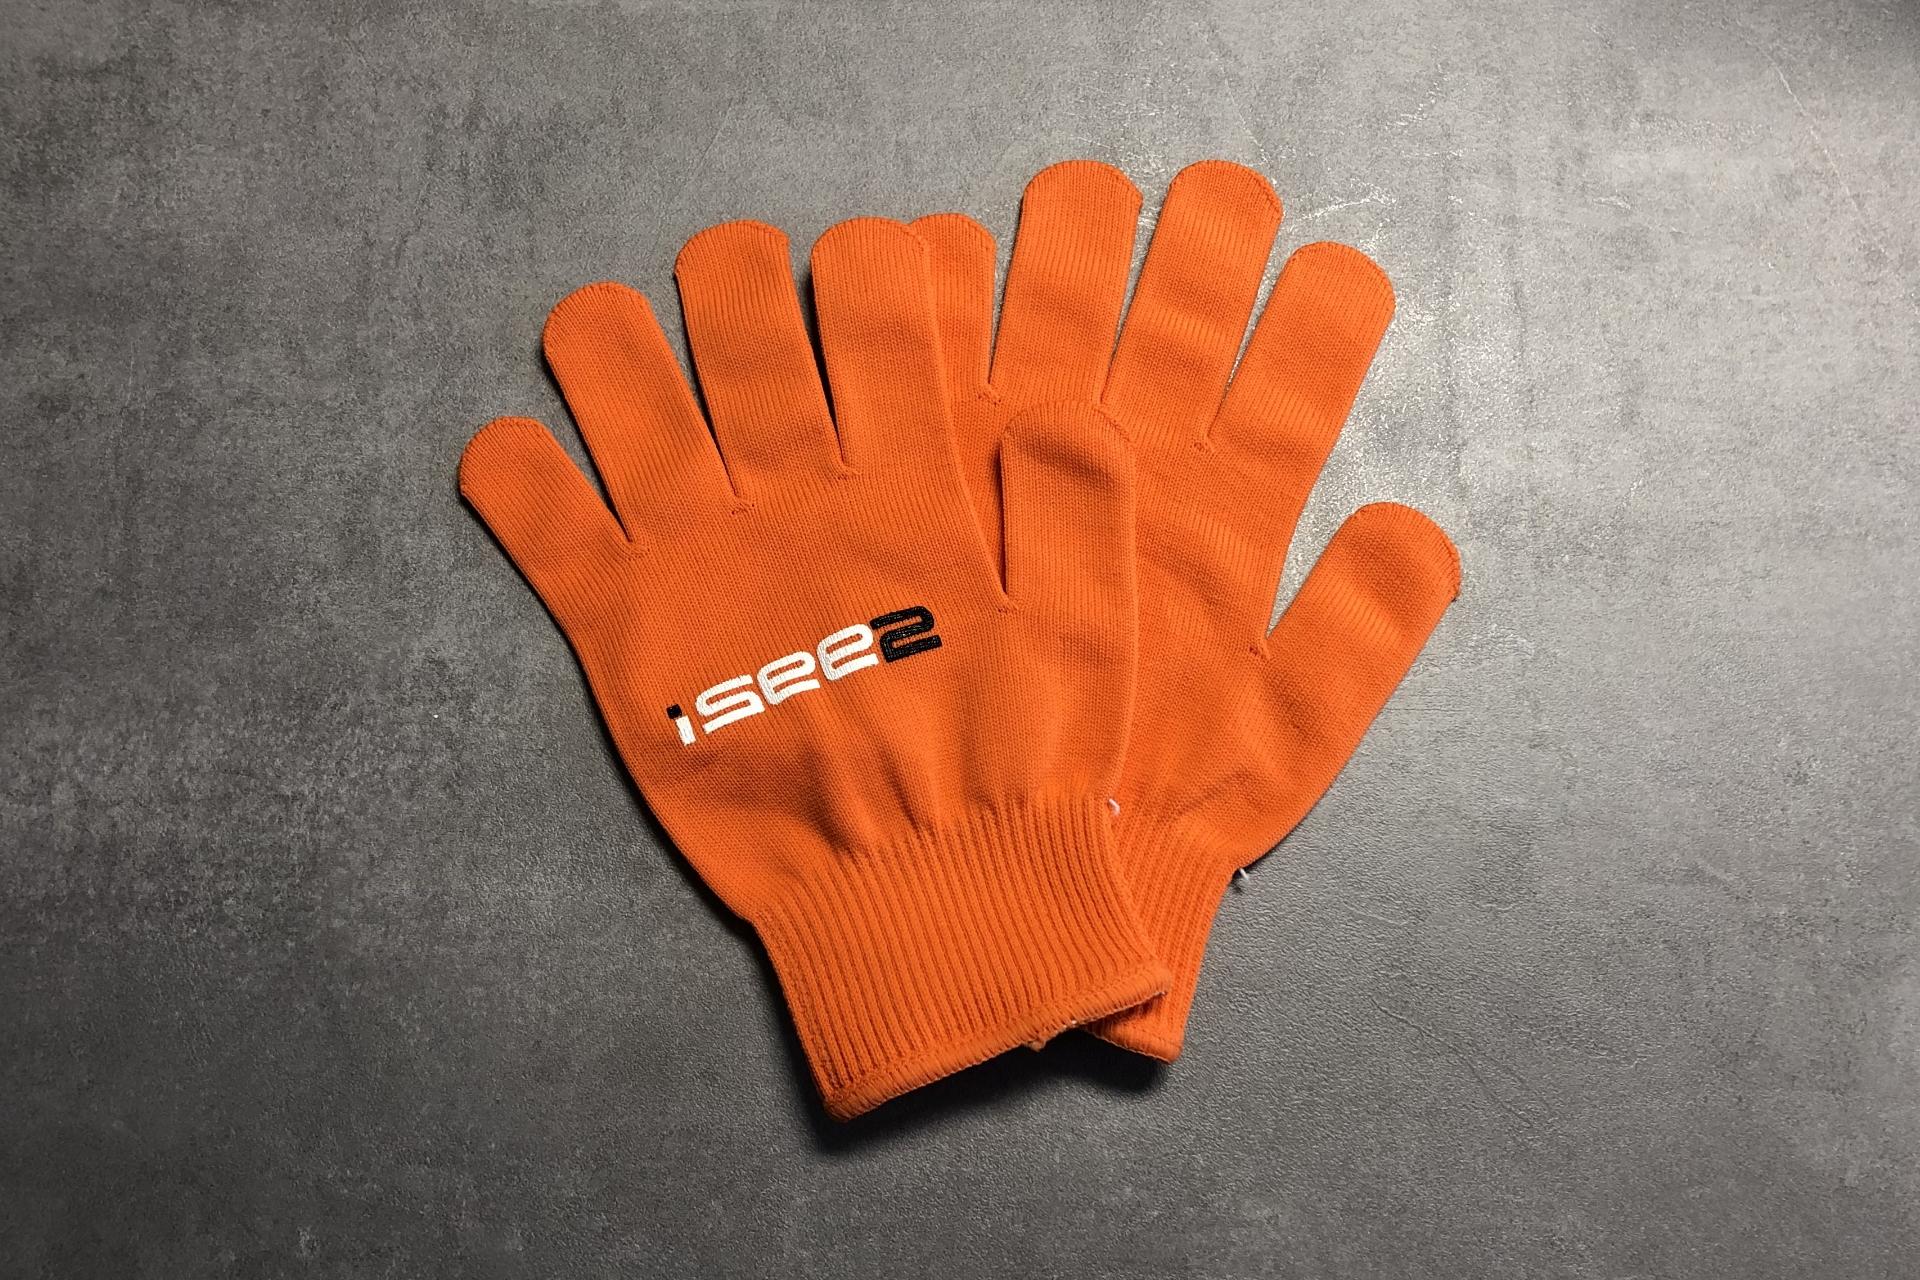 Foto: iSee2 Glove orange / Verklebehandschuh - M